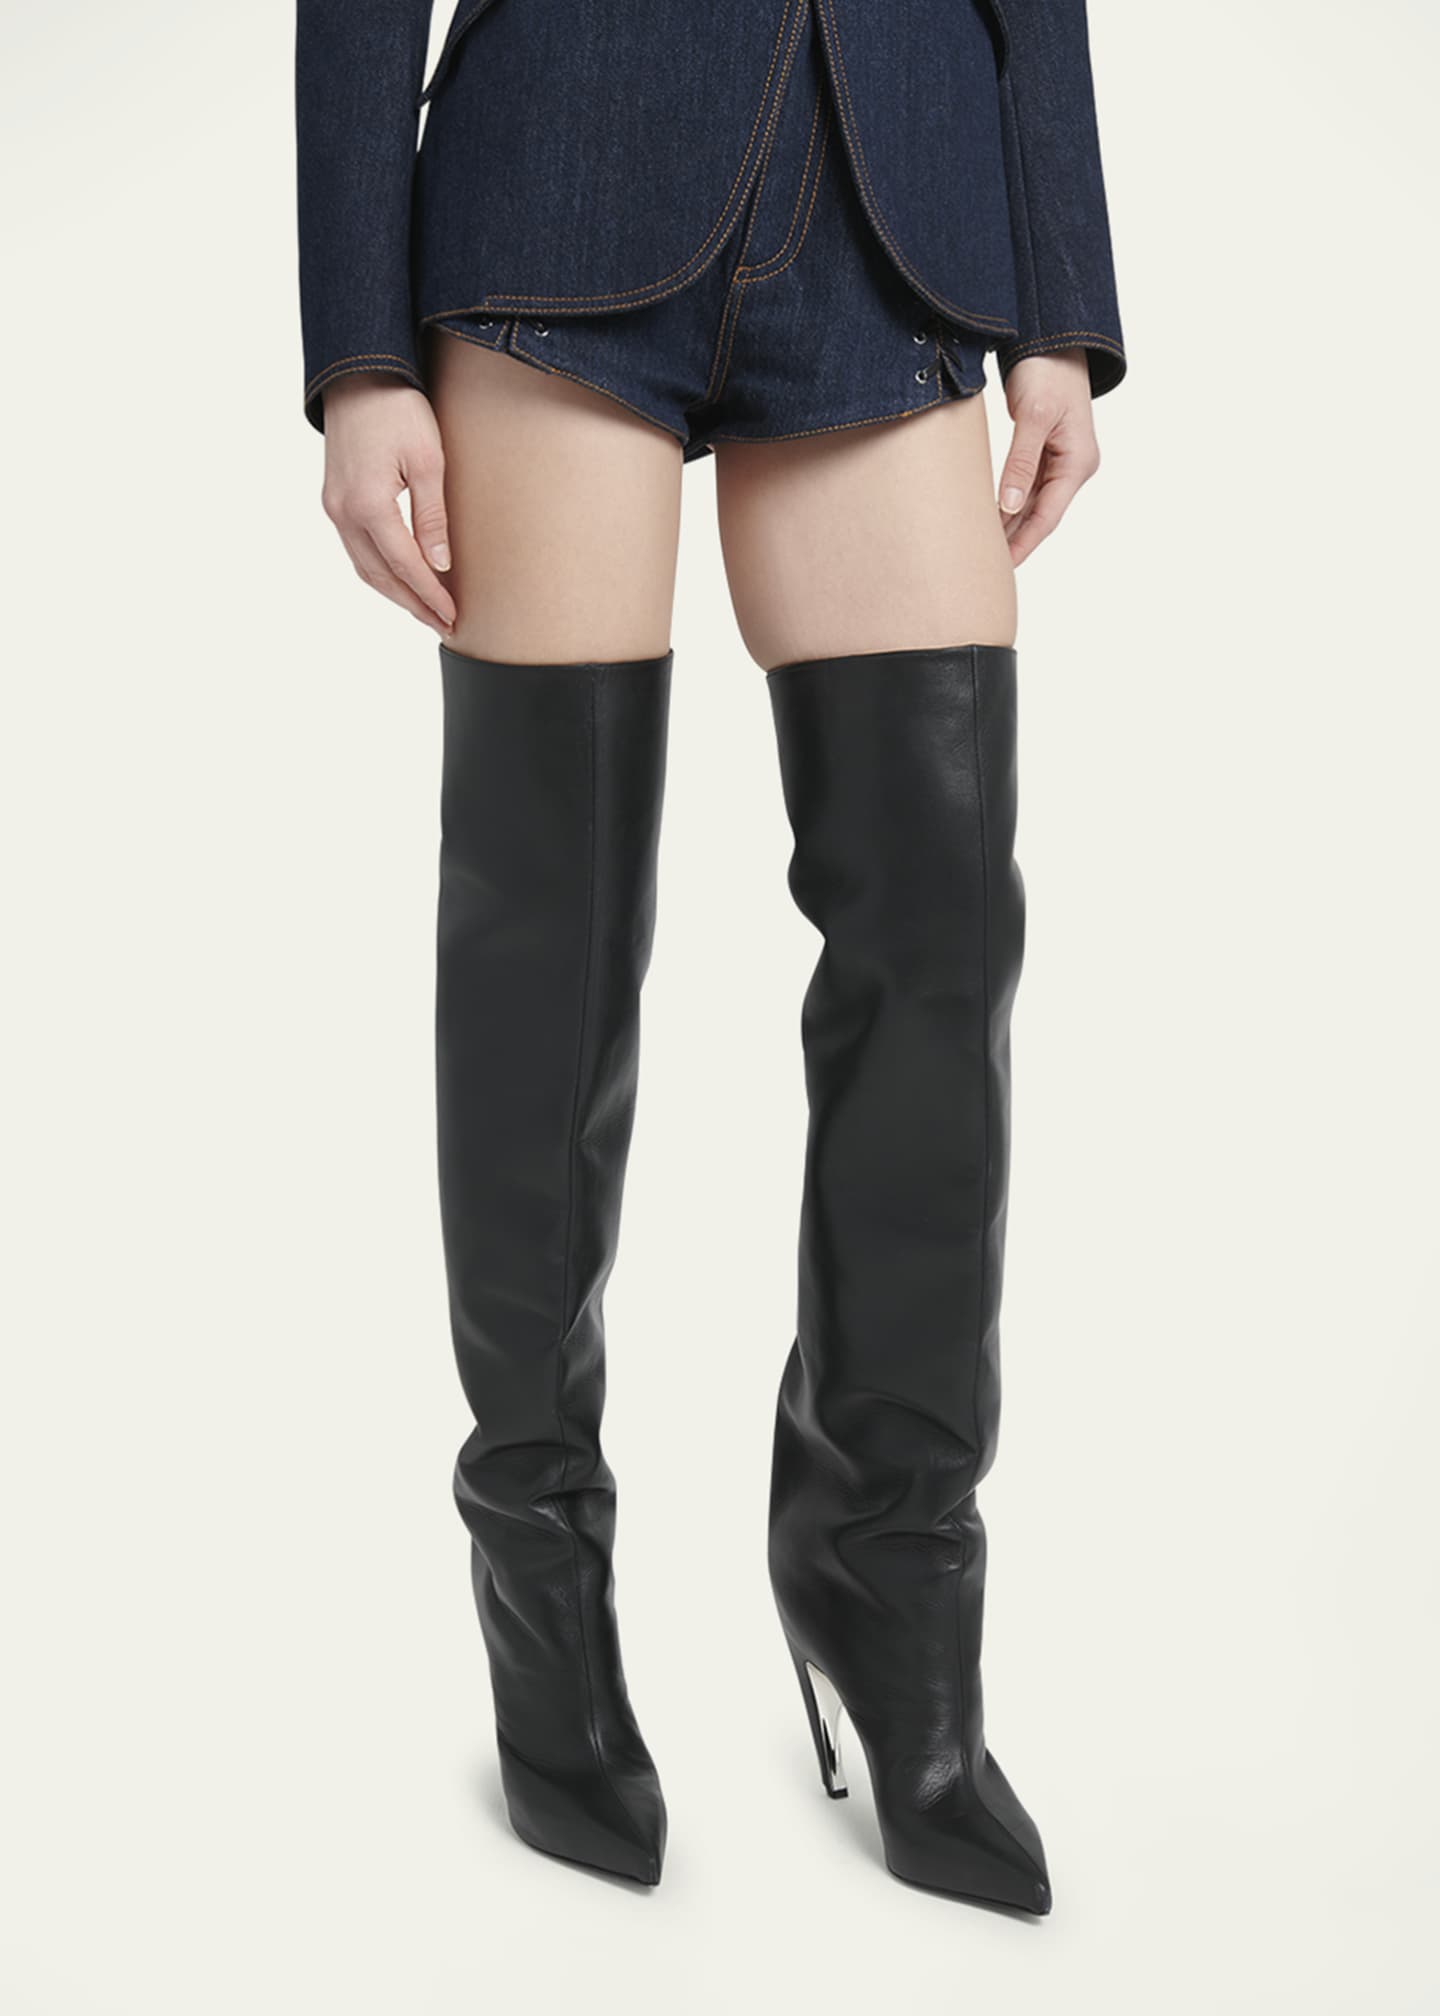 Alexander McQueen Armadillo Leather Over-The-Knee Boots - Bergdorf Goodman